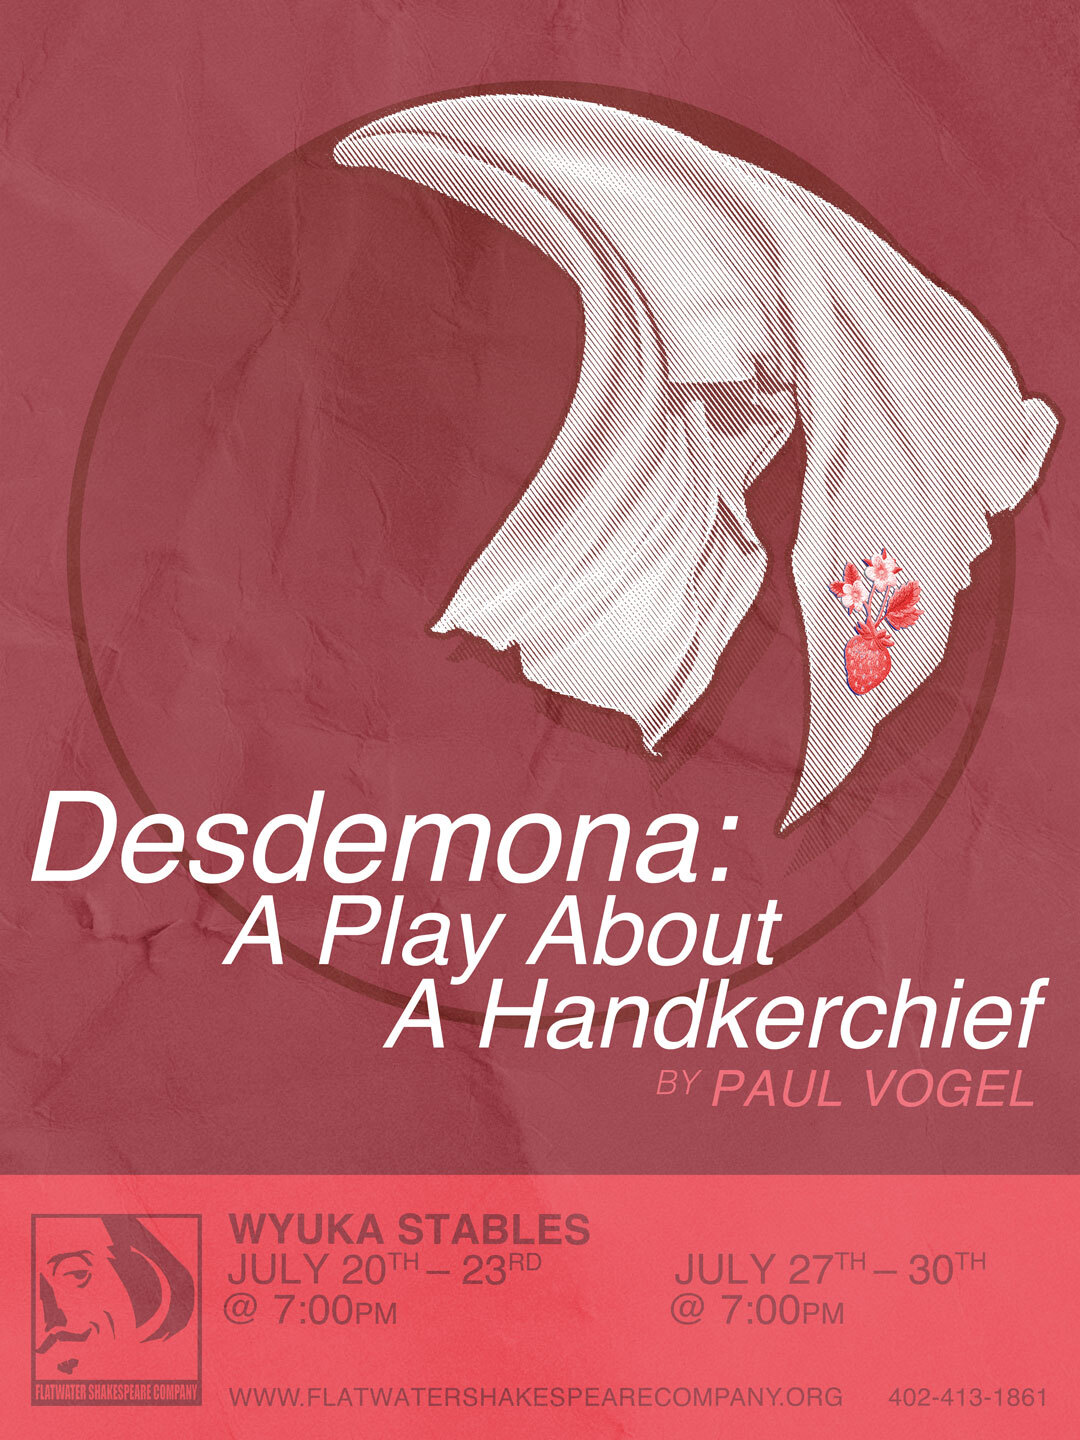 7/20 SEN - SENIOR (65+): Thurs. July 20, 2023 | 7:00 p.m. - 10:00 p.m. CST | Wyuka Stables (Desdemona: A Play about a Handkerchief)